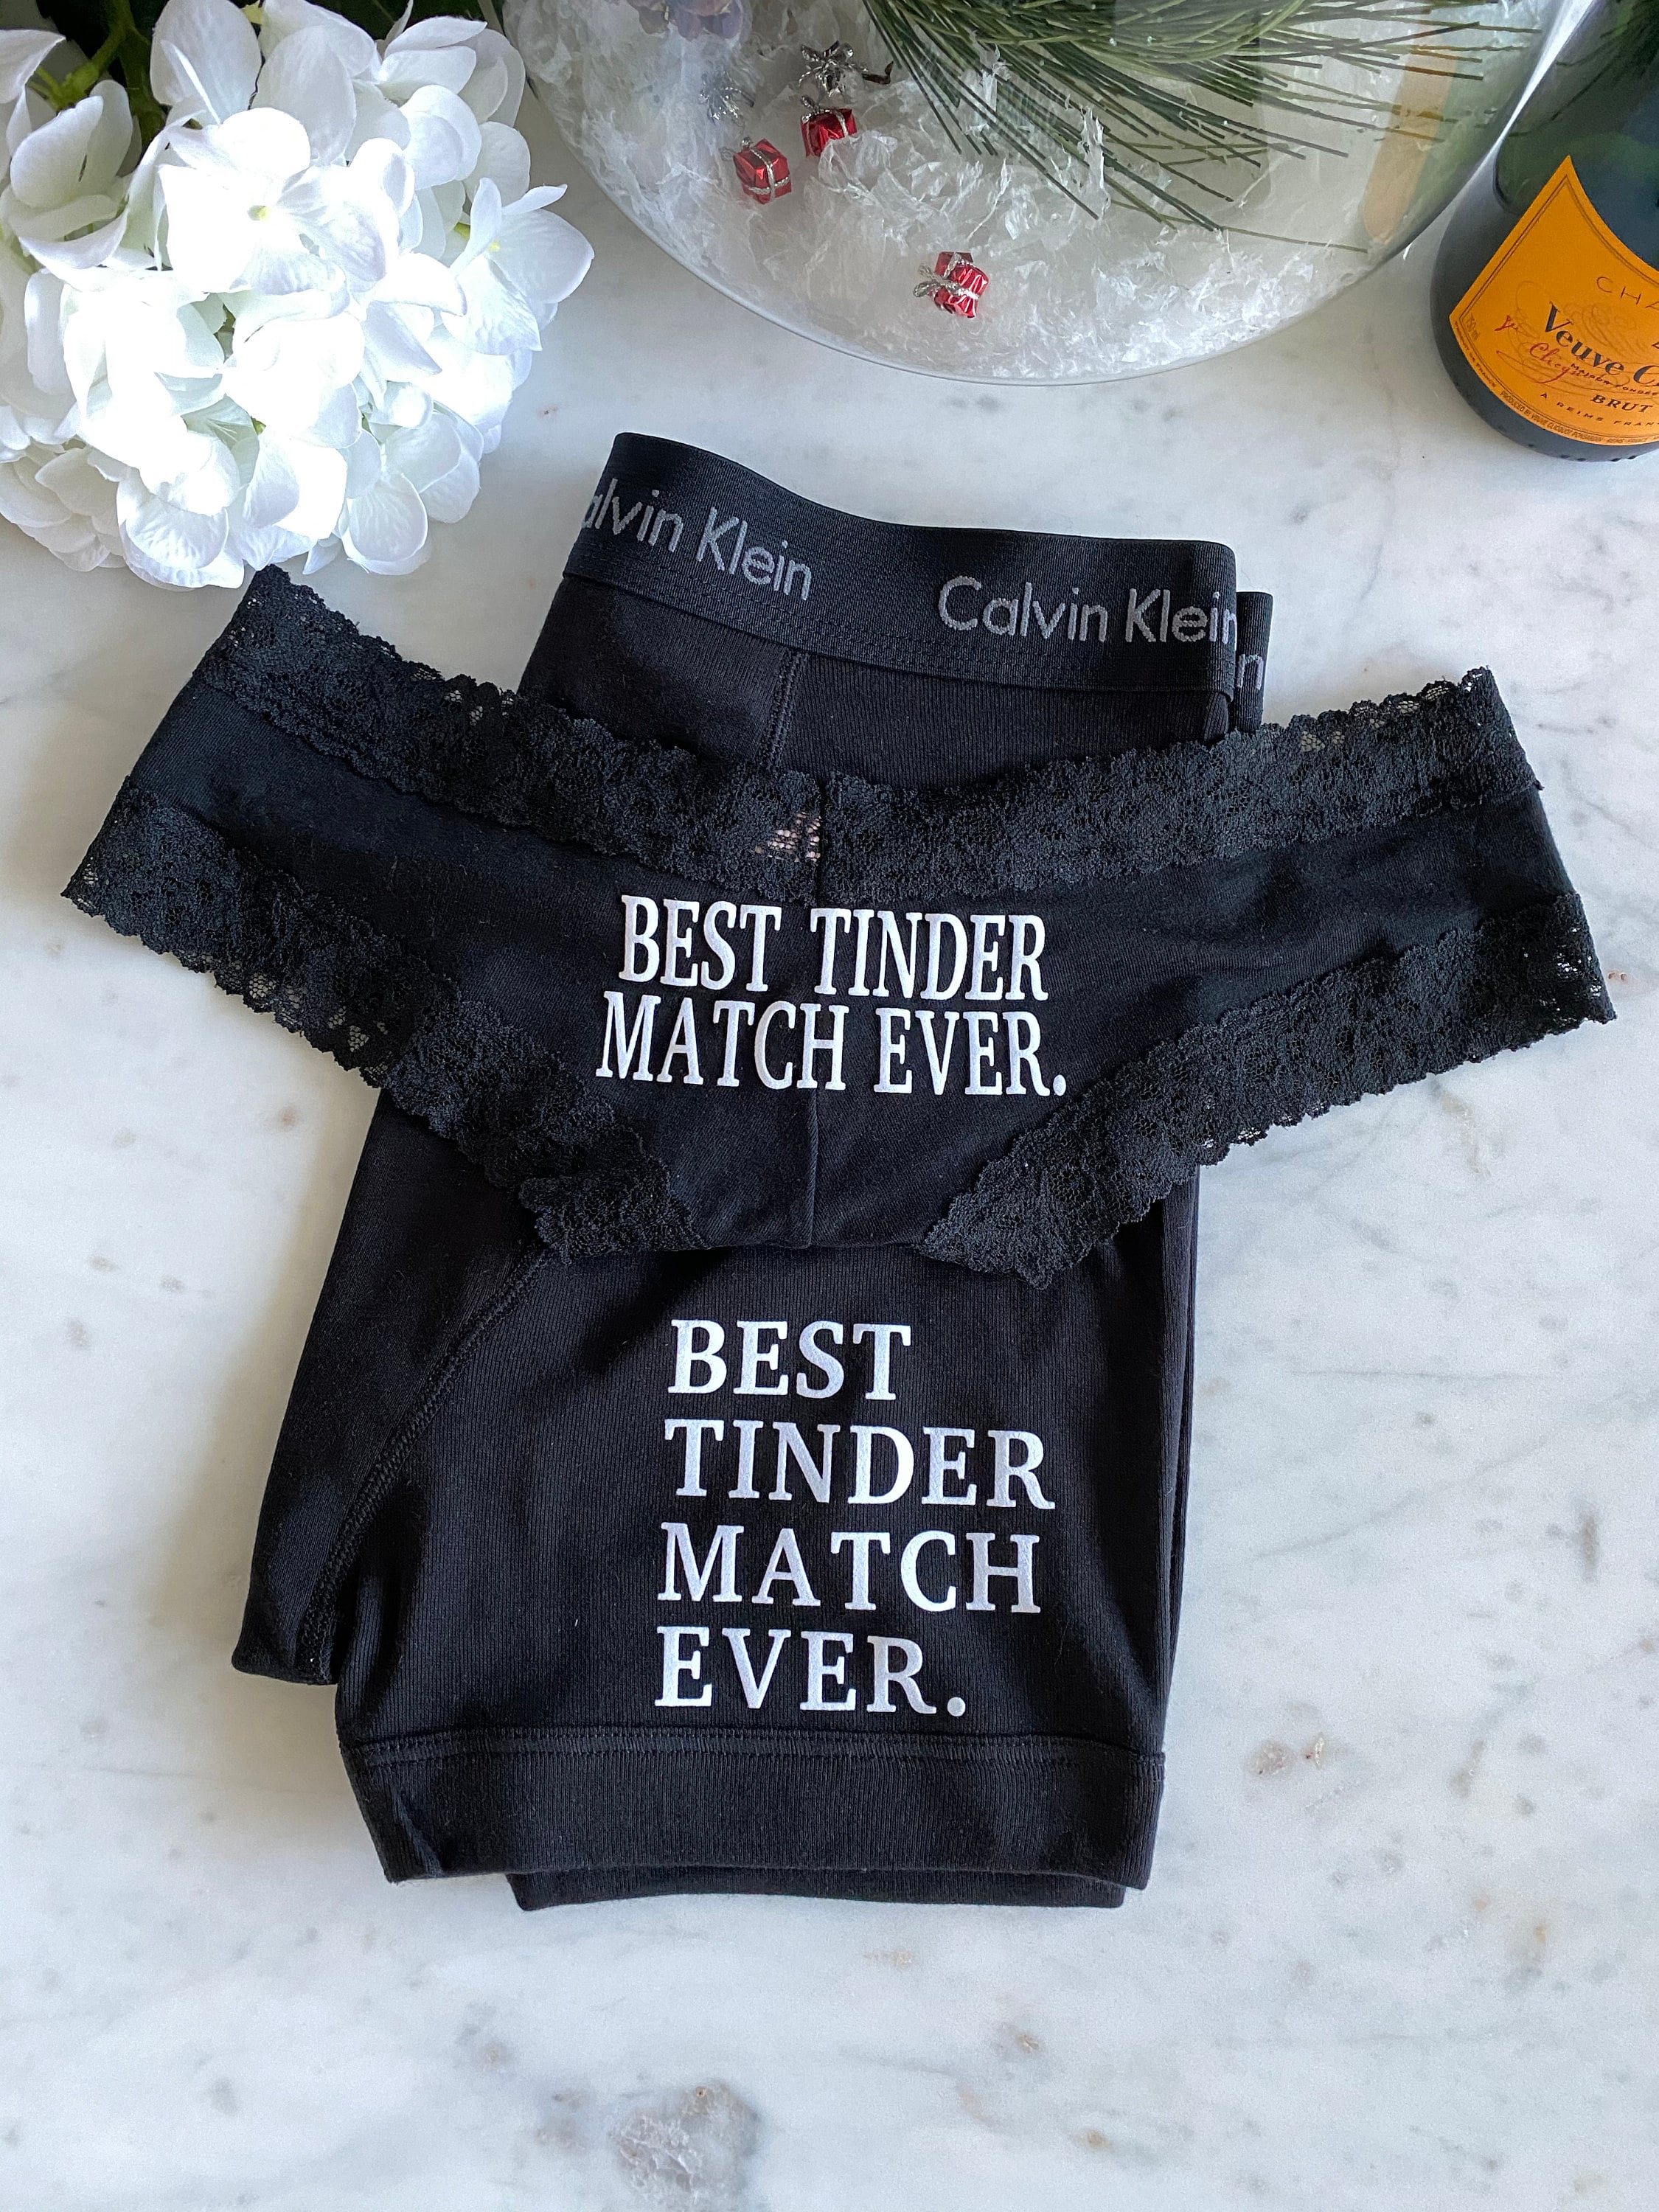 Calvin Klein and Victoria Secret Black Couples Best Tinder Match